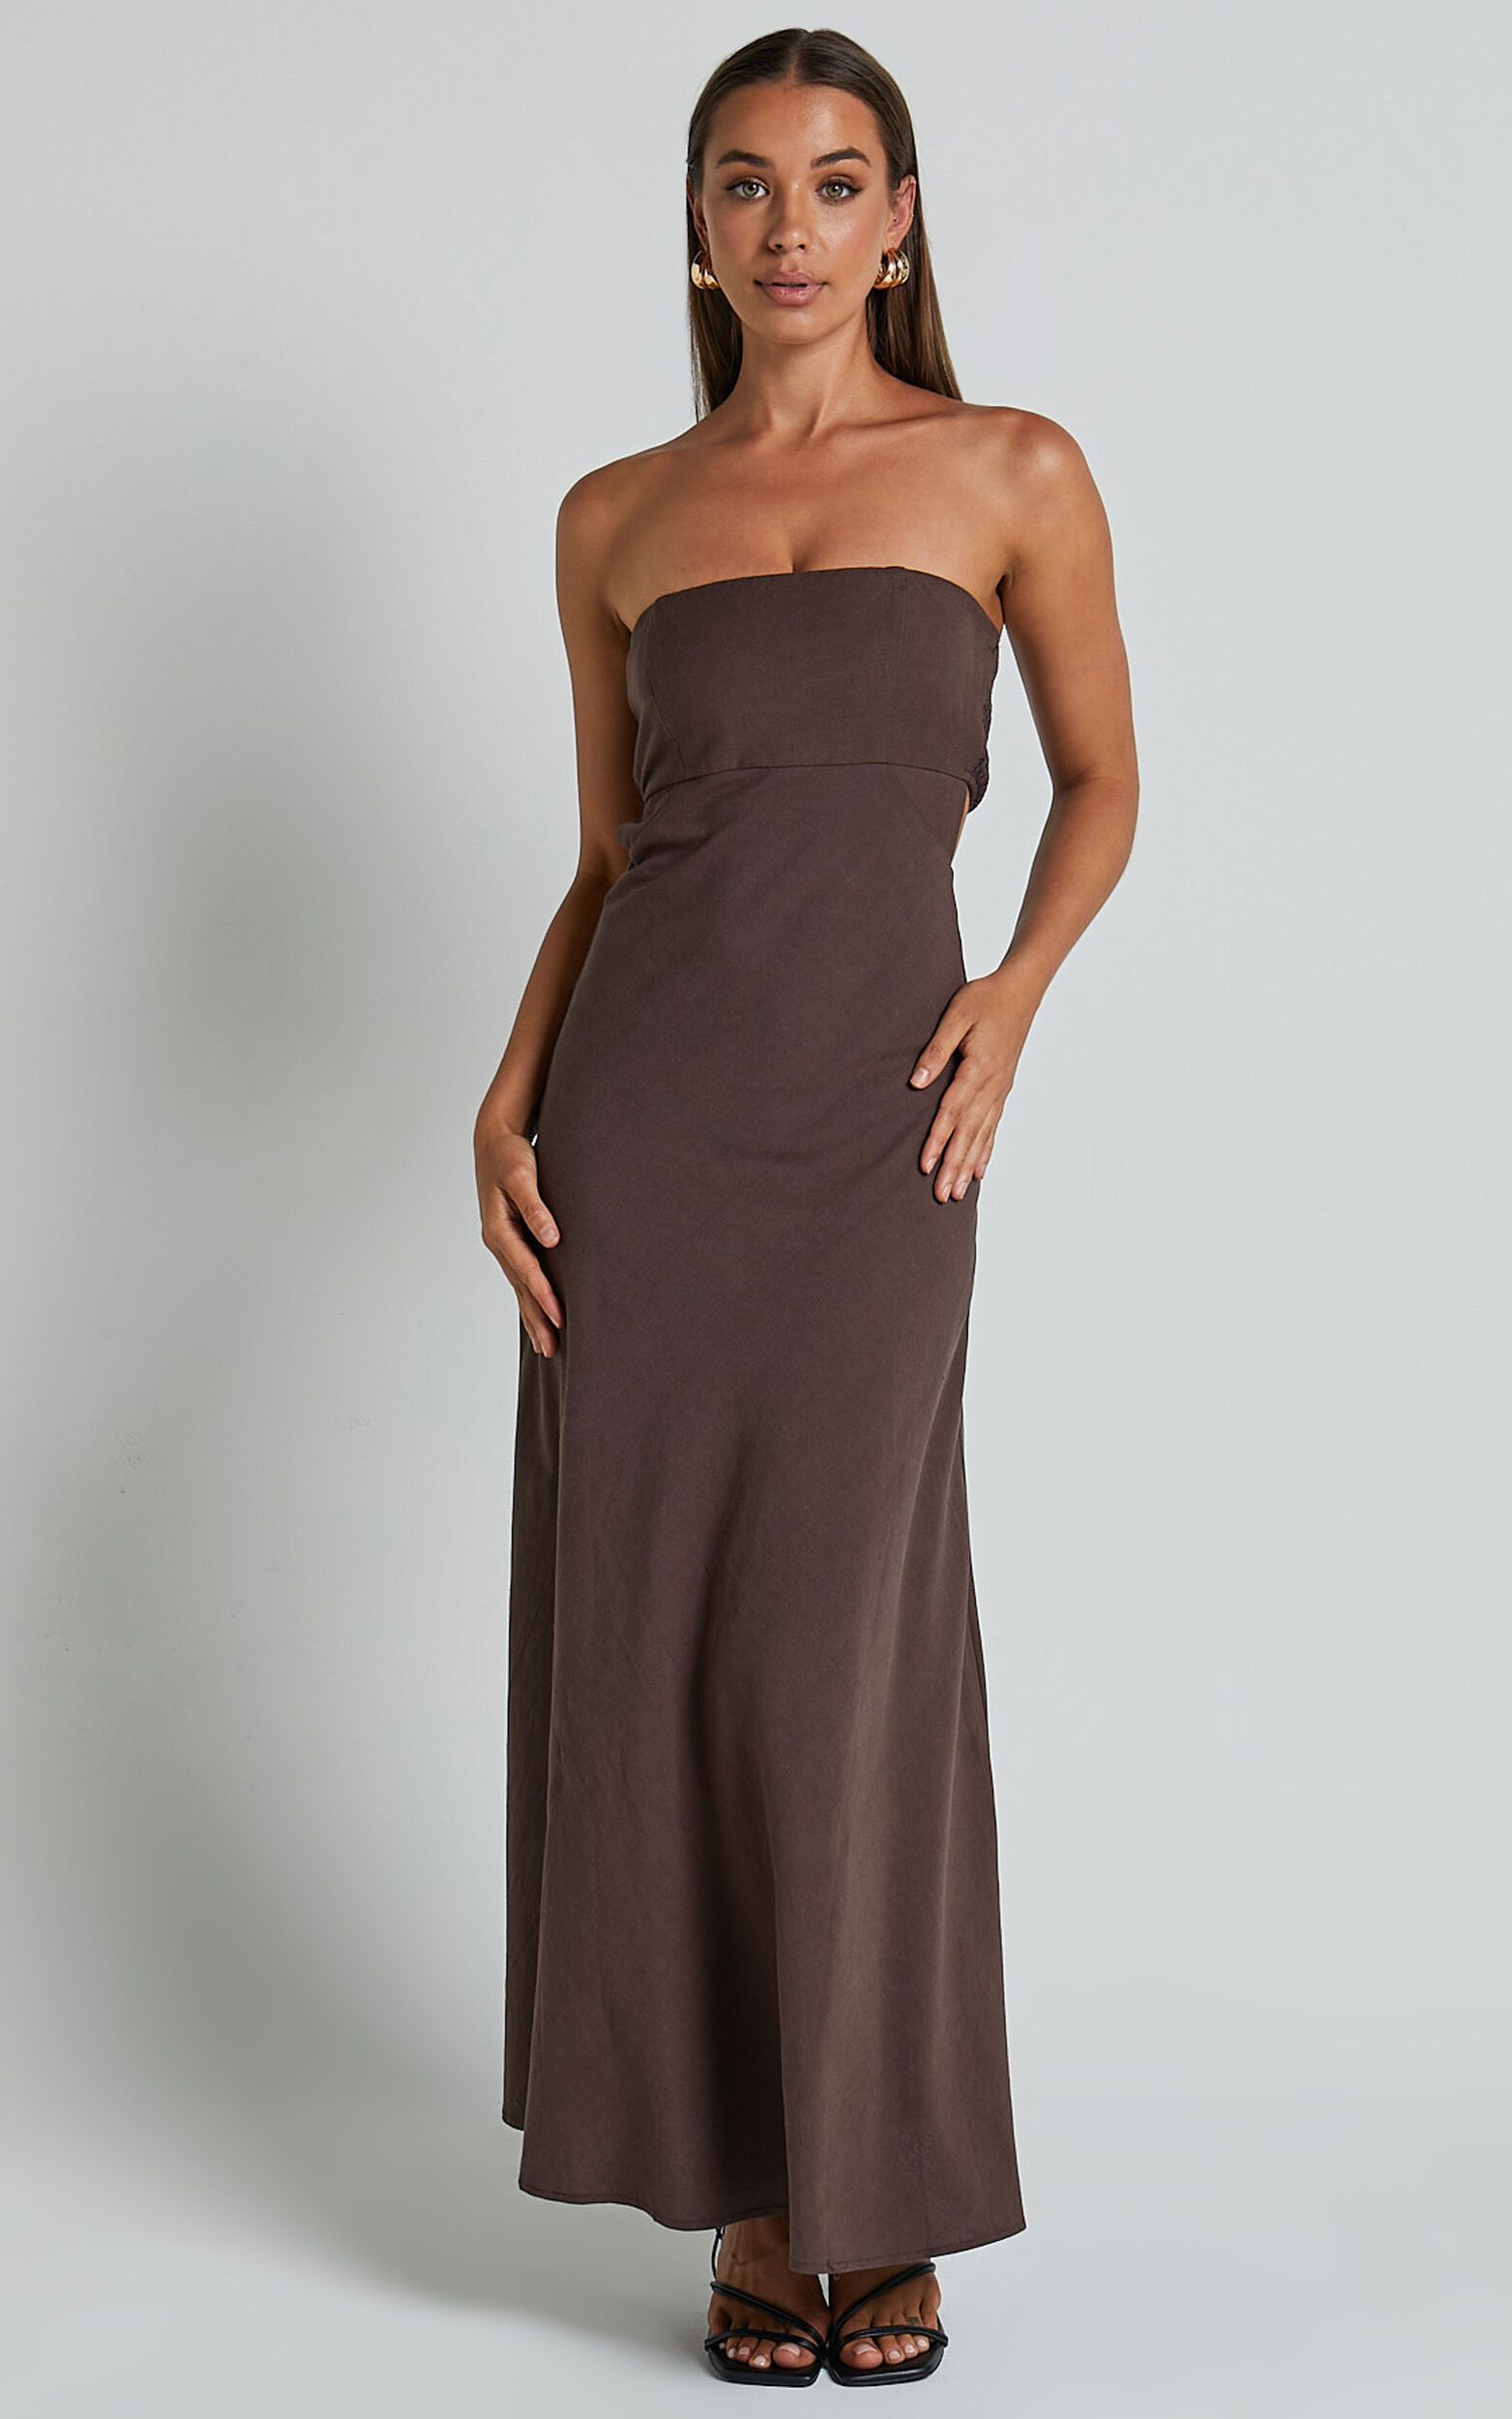 Elerie Maxi Dress - Strapless Linen Dress in Chocolate | Showpo (US, UK & Europe)